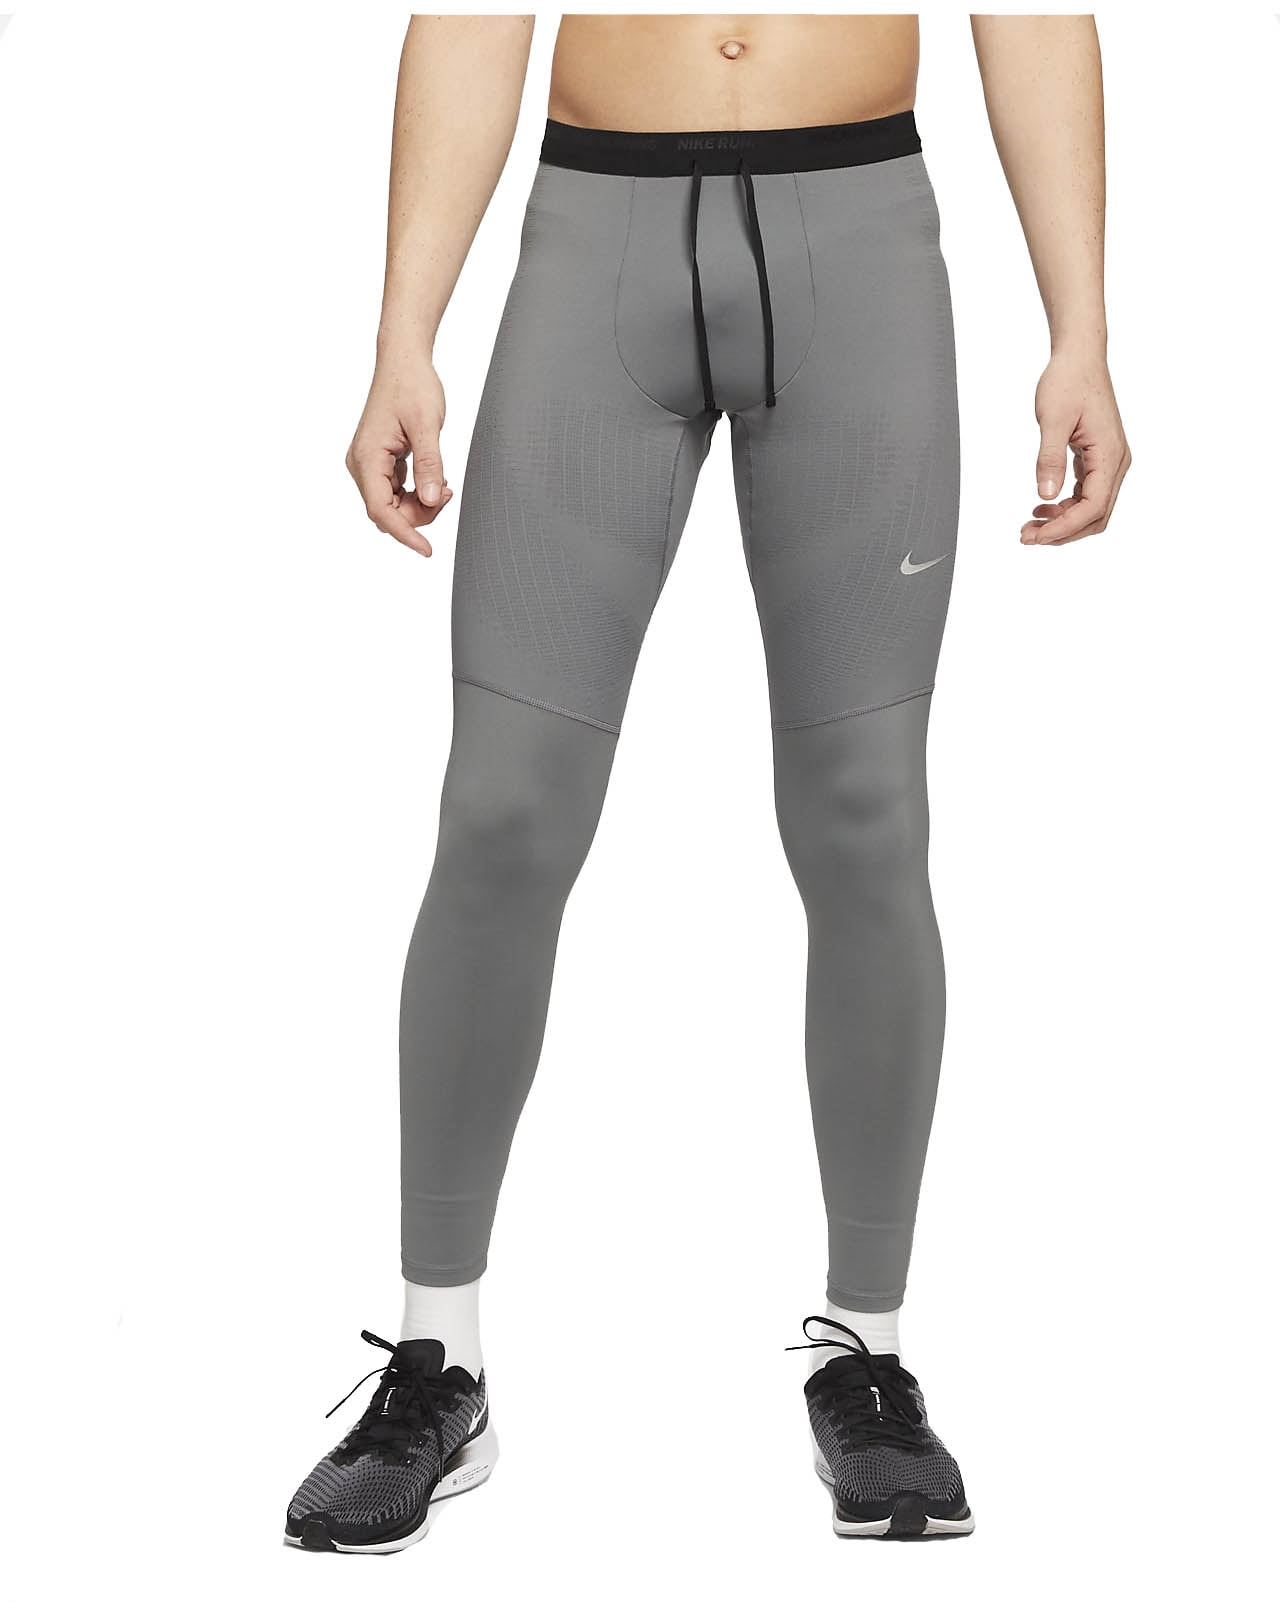 Nike Men's Phenom Elite Running Tights (Smoke Grey, Small